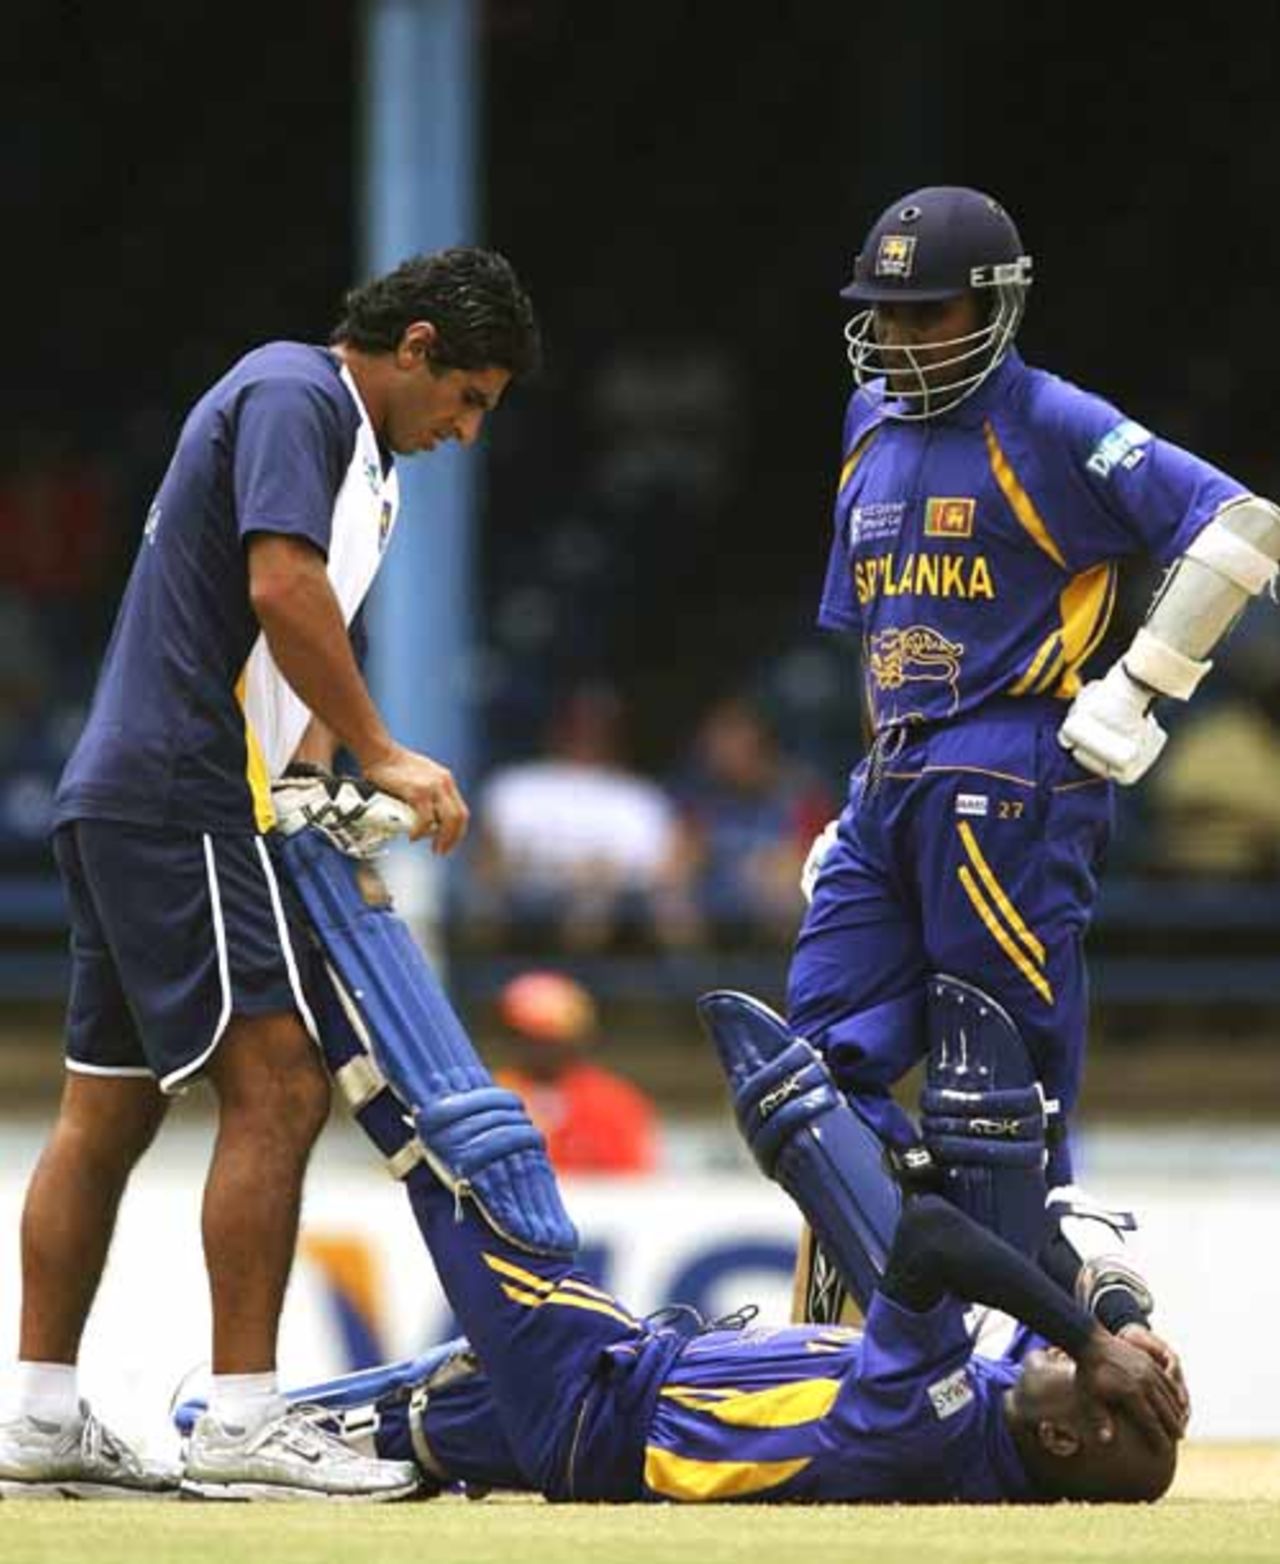 Sanath Jayasuriya receives medical attention after he twisted his knee, Bangladesh v Sri Lanka, Group B, Trinidad, March 21, 2007